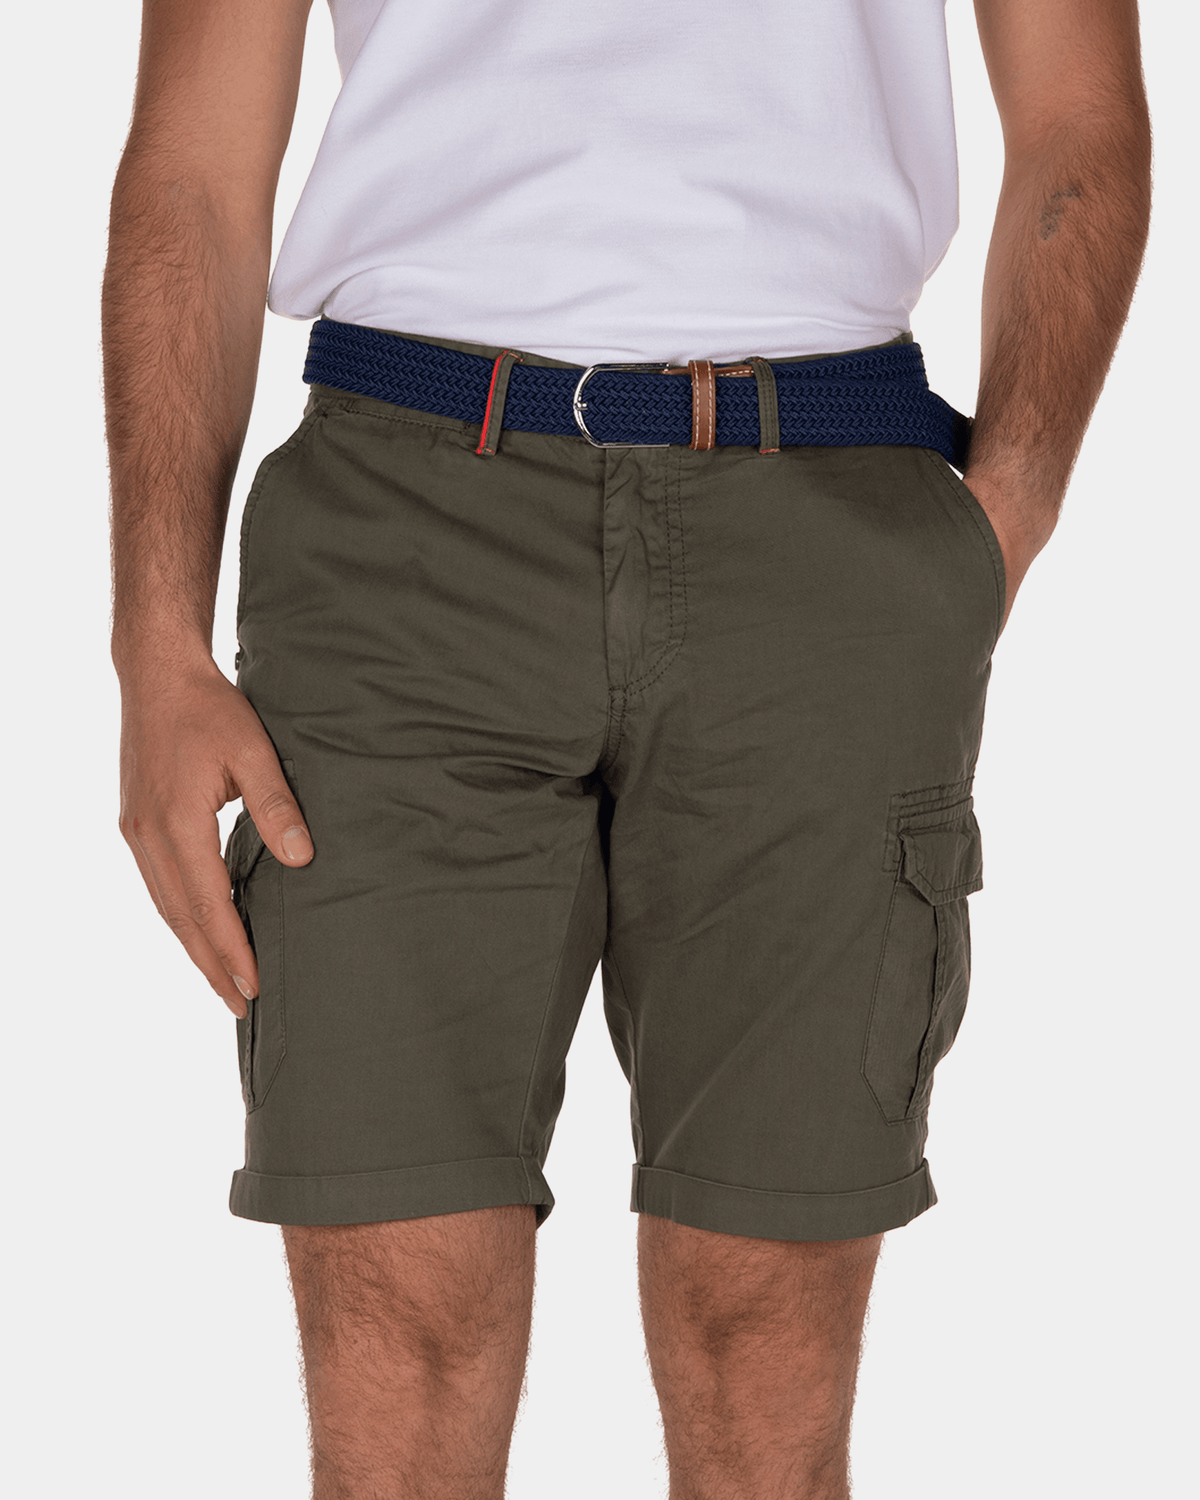 Larry Bay cargo shorts - Army